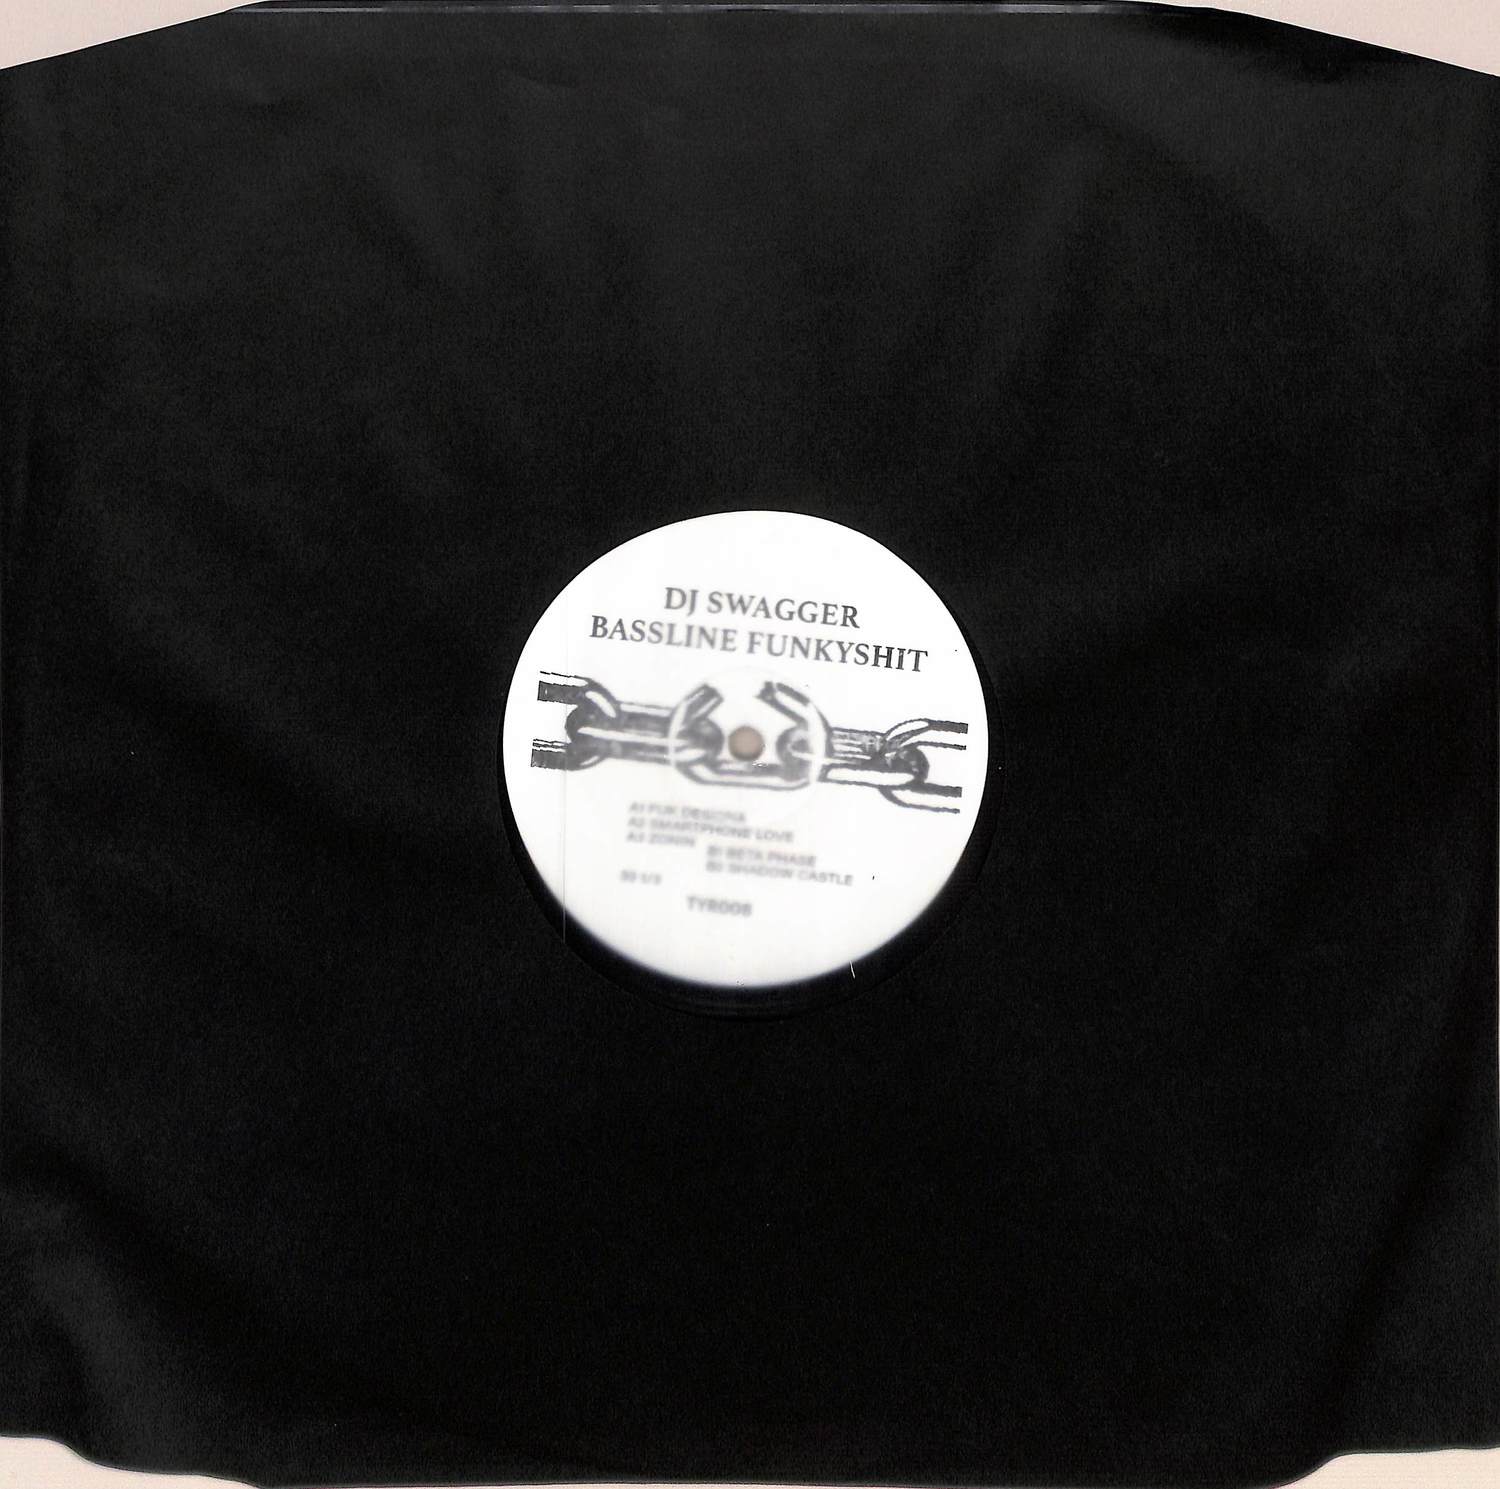 DJ Swagger - BASSLINE FUNKYSHIT EP